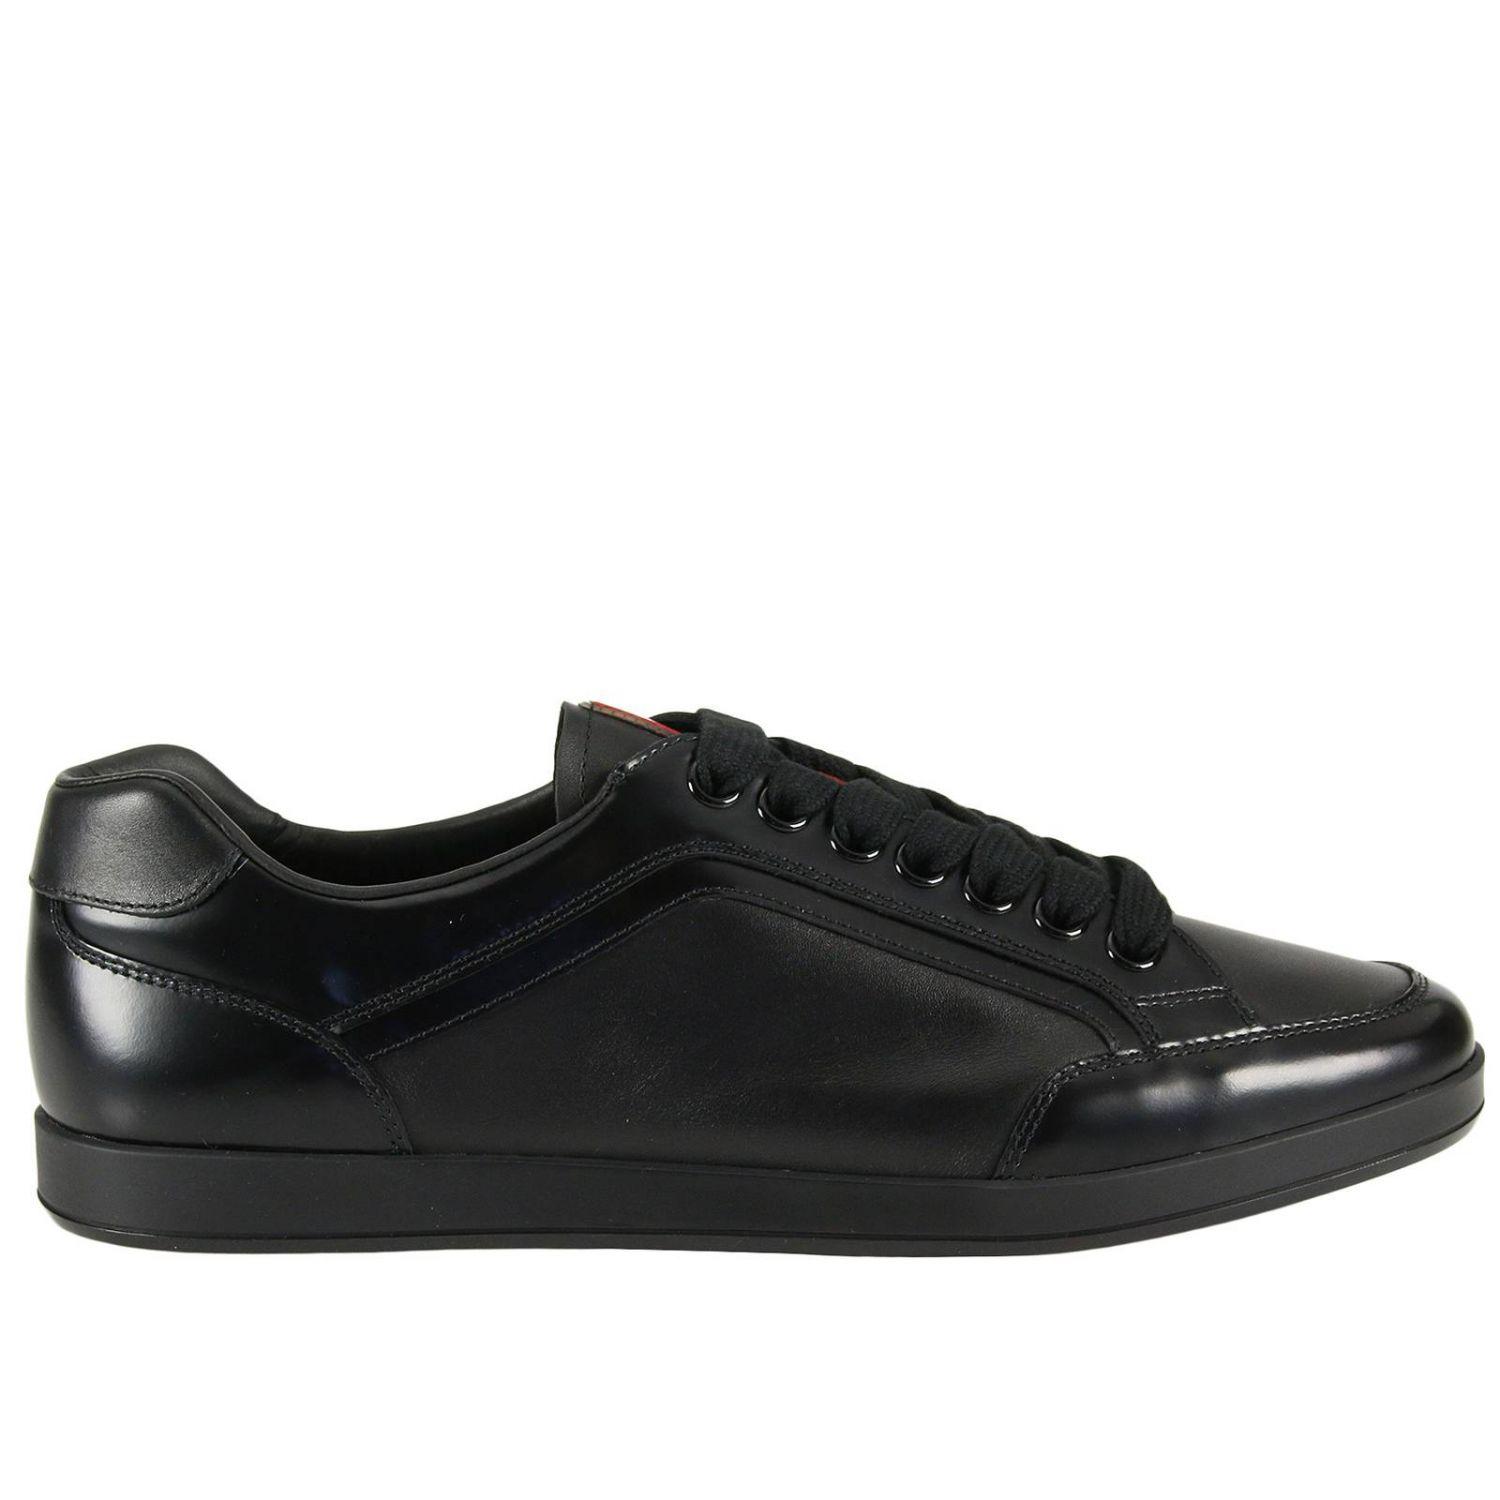 Prada Leather Sneakers Shoes Men in Black for Men - Lyst